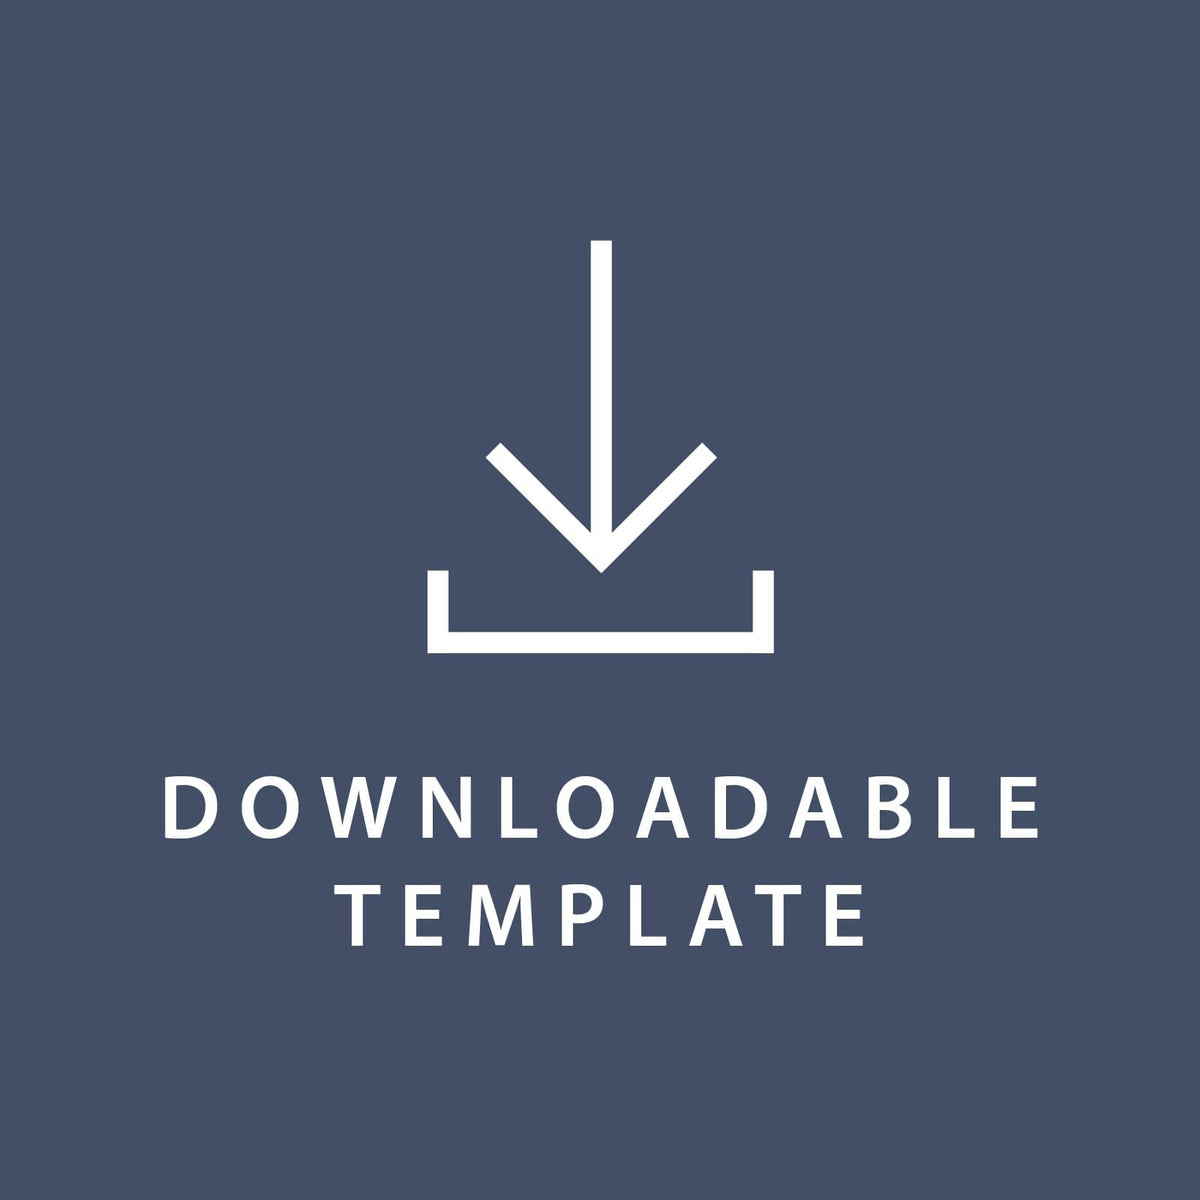 Template for 5.19 x 9 Labels Gartner Studios Template tmplt0669